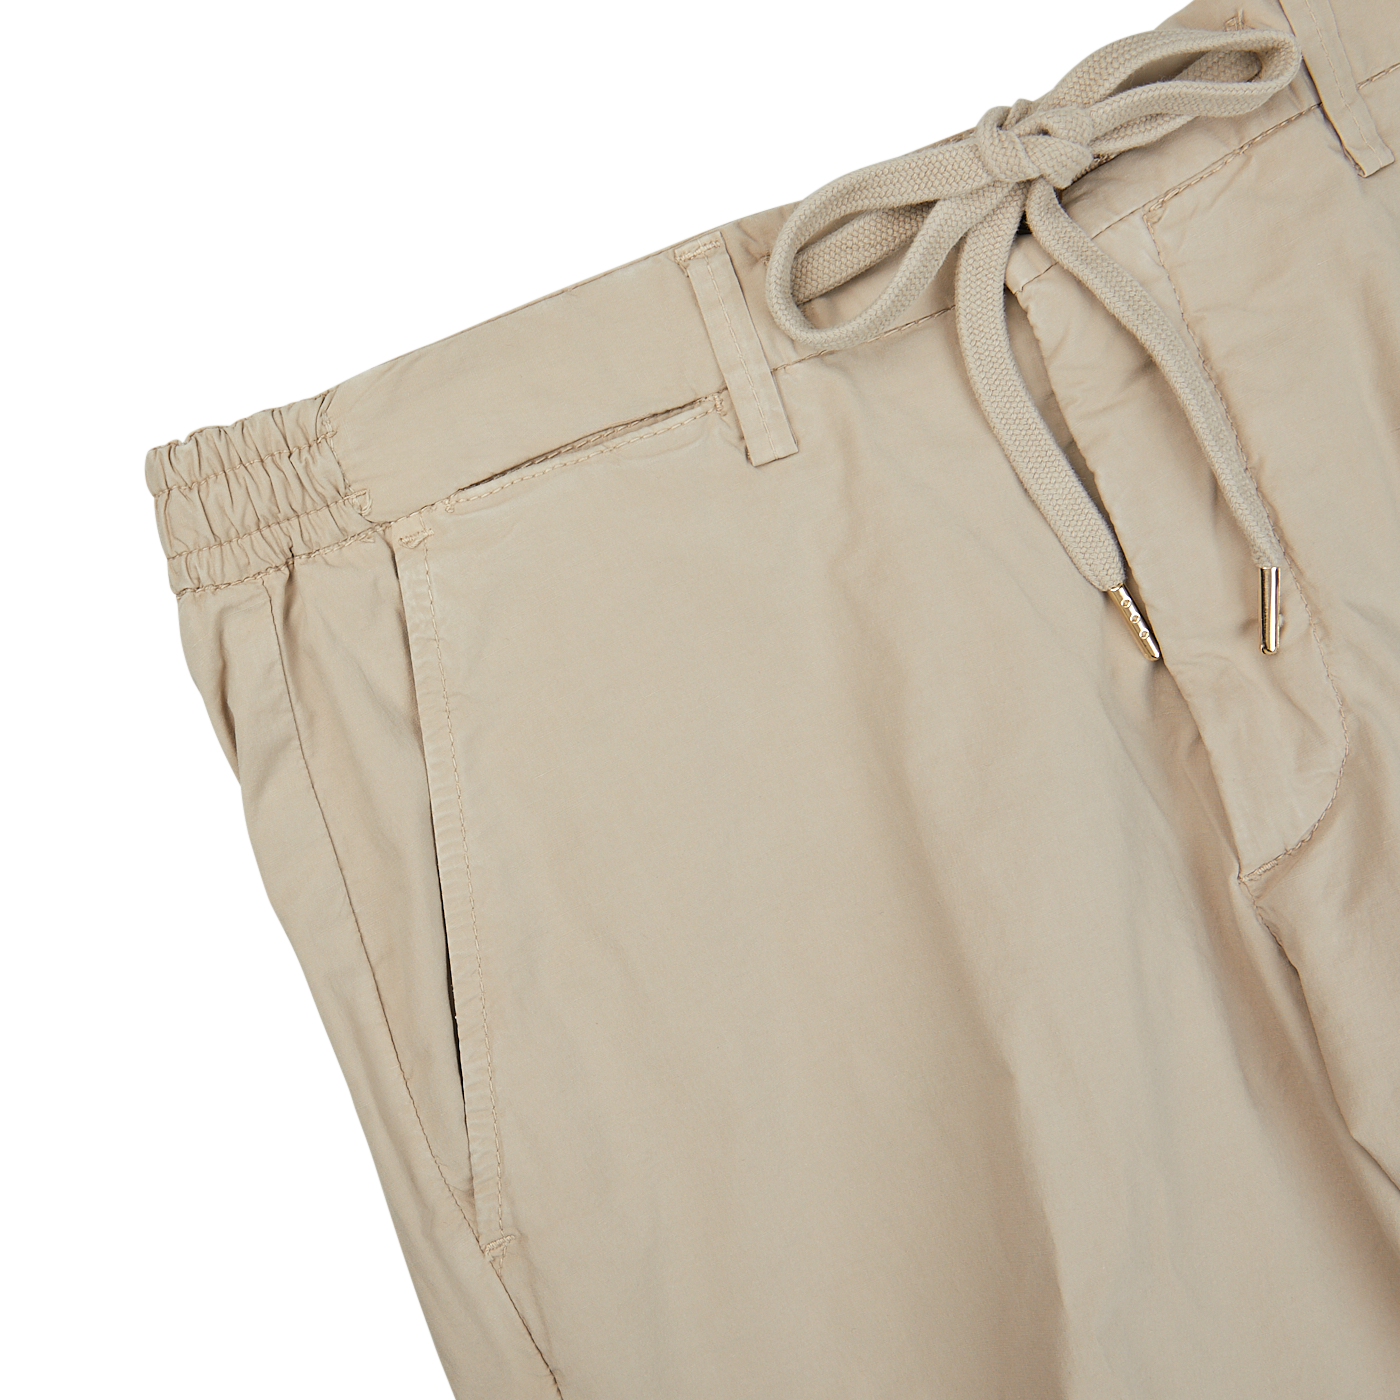 Beige Cotton Drawstring Malibu Shorts with elastic waist by Briglia on a white background.